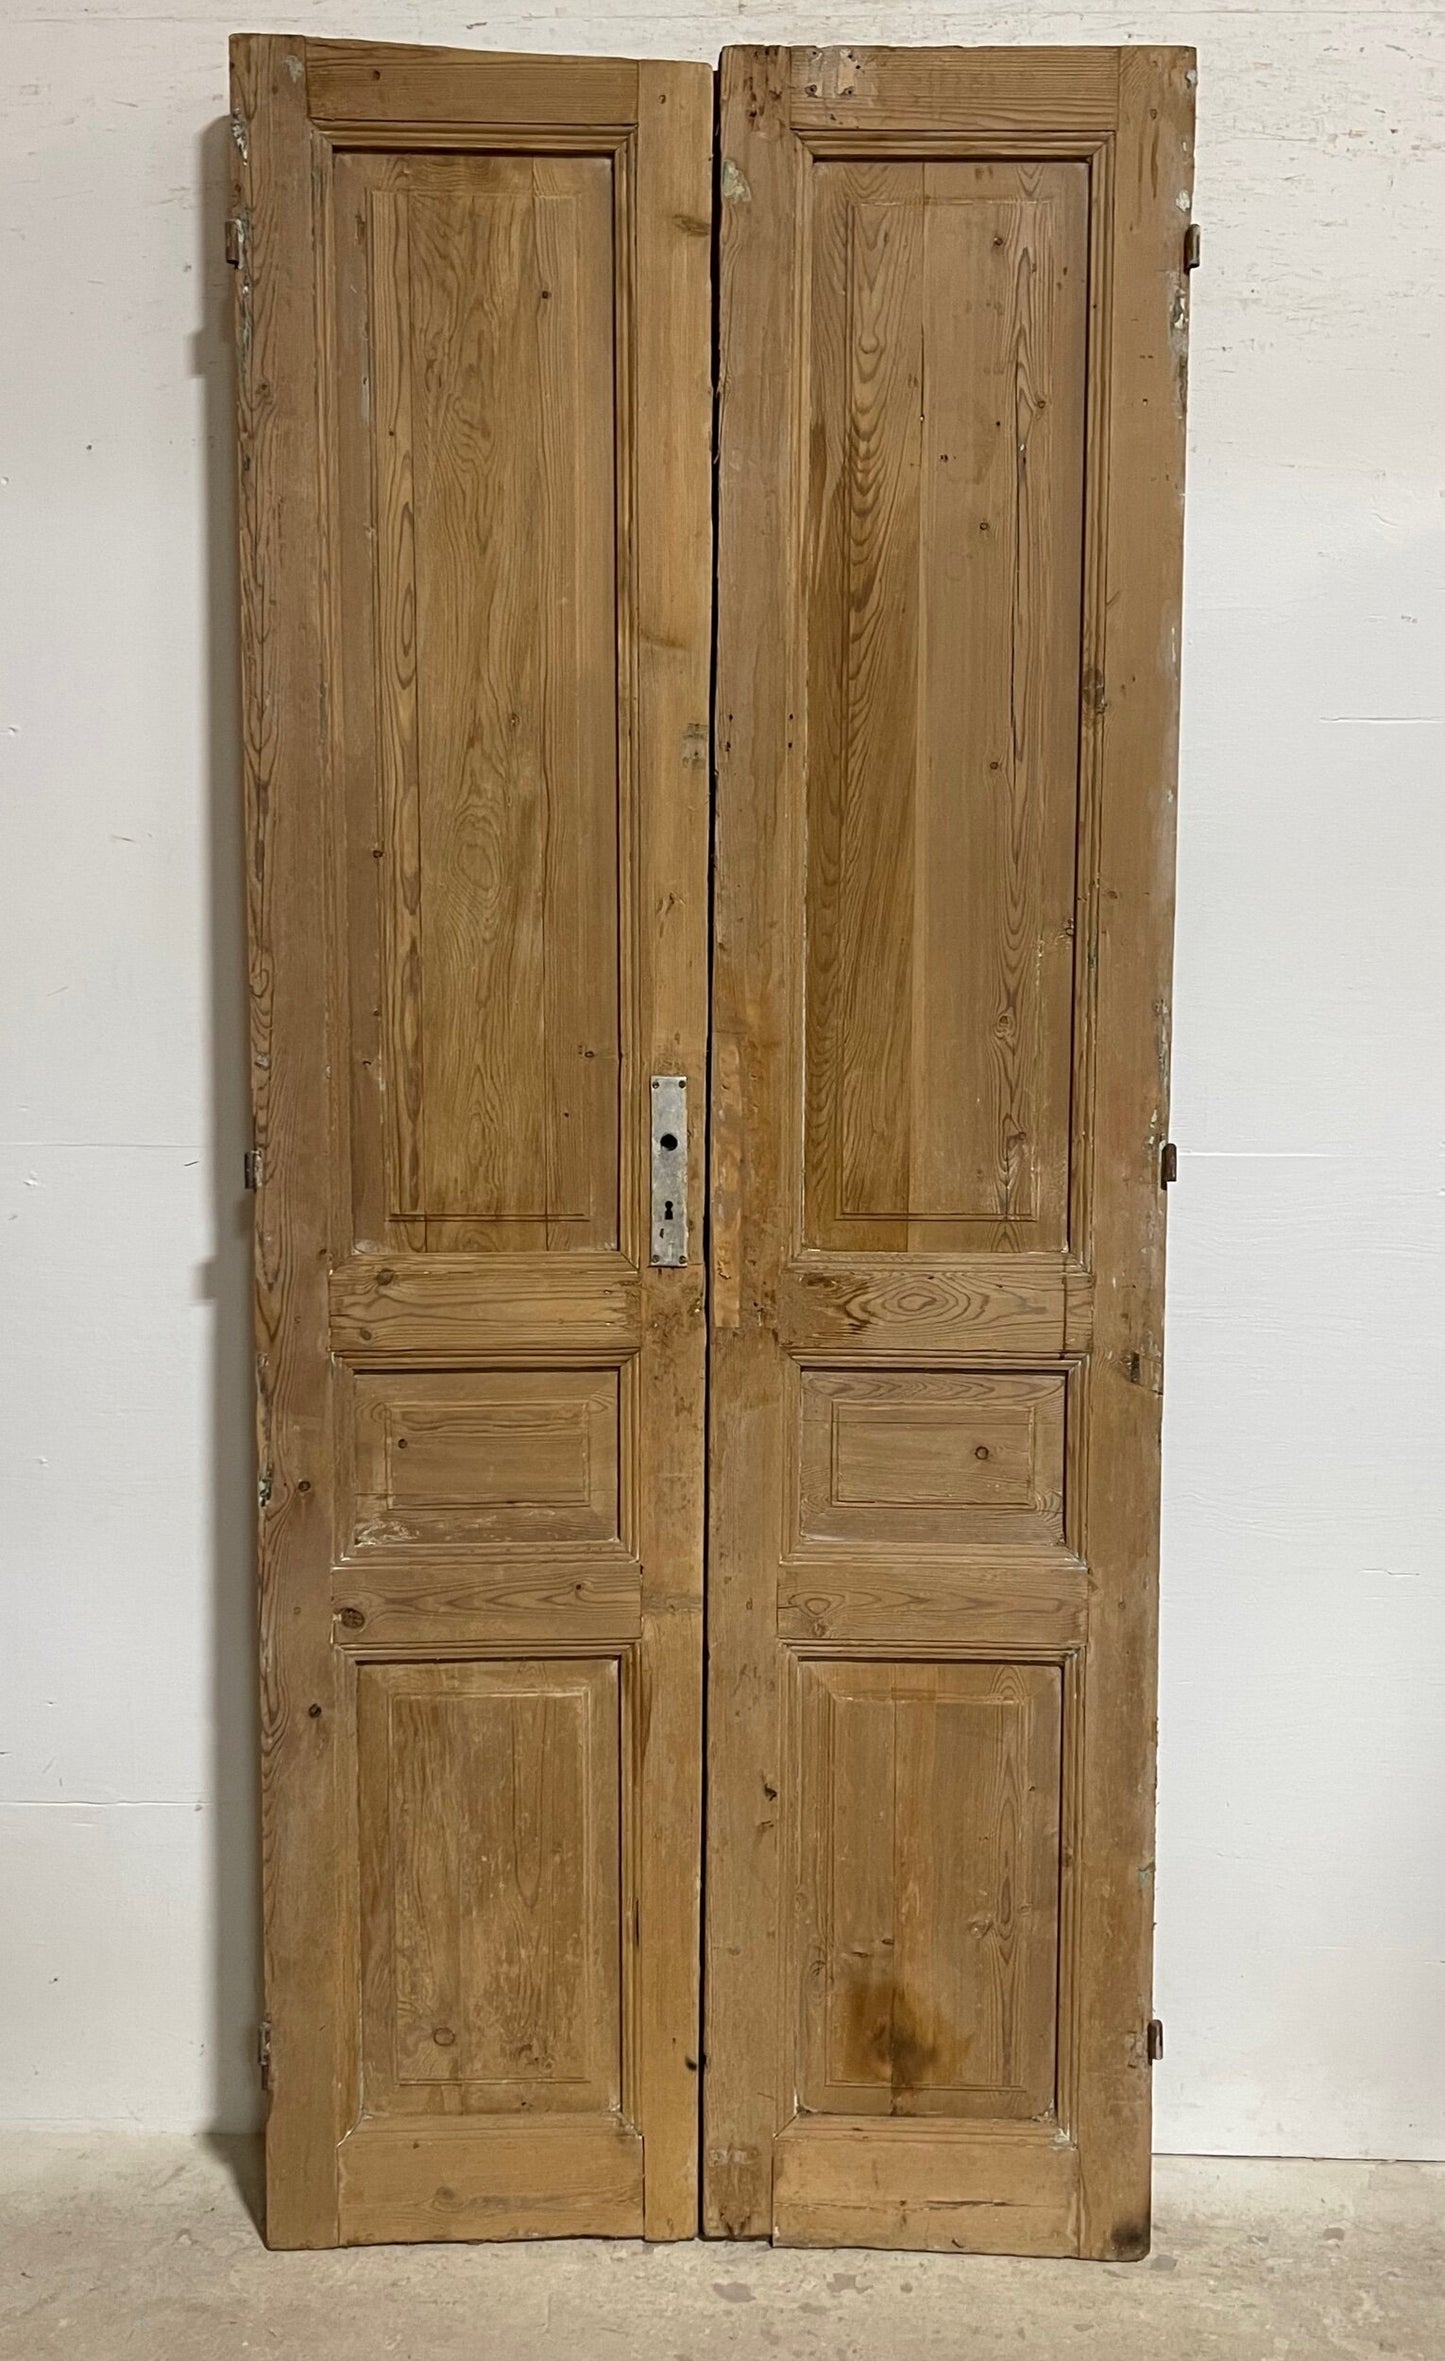 Antique French panel doors (93.75x39) I175